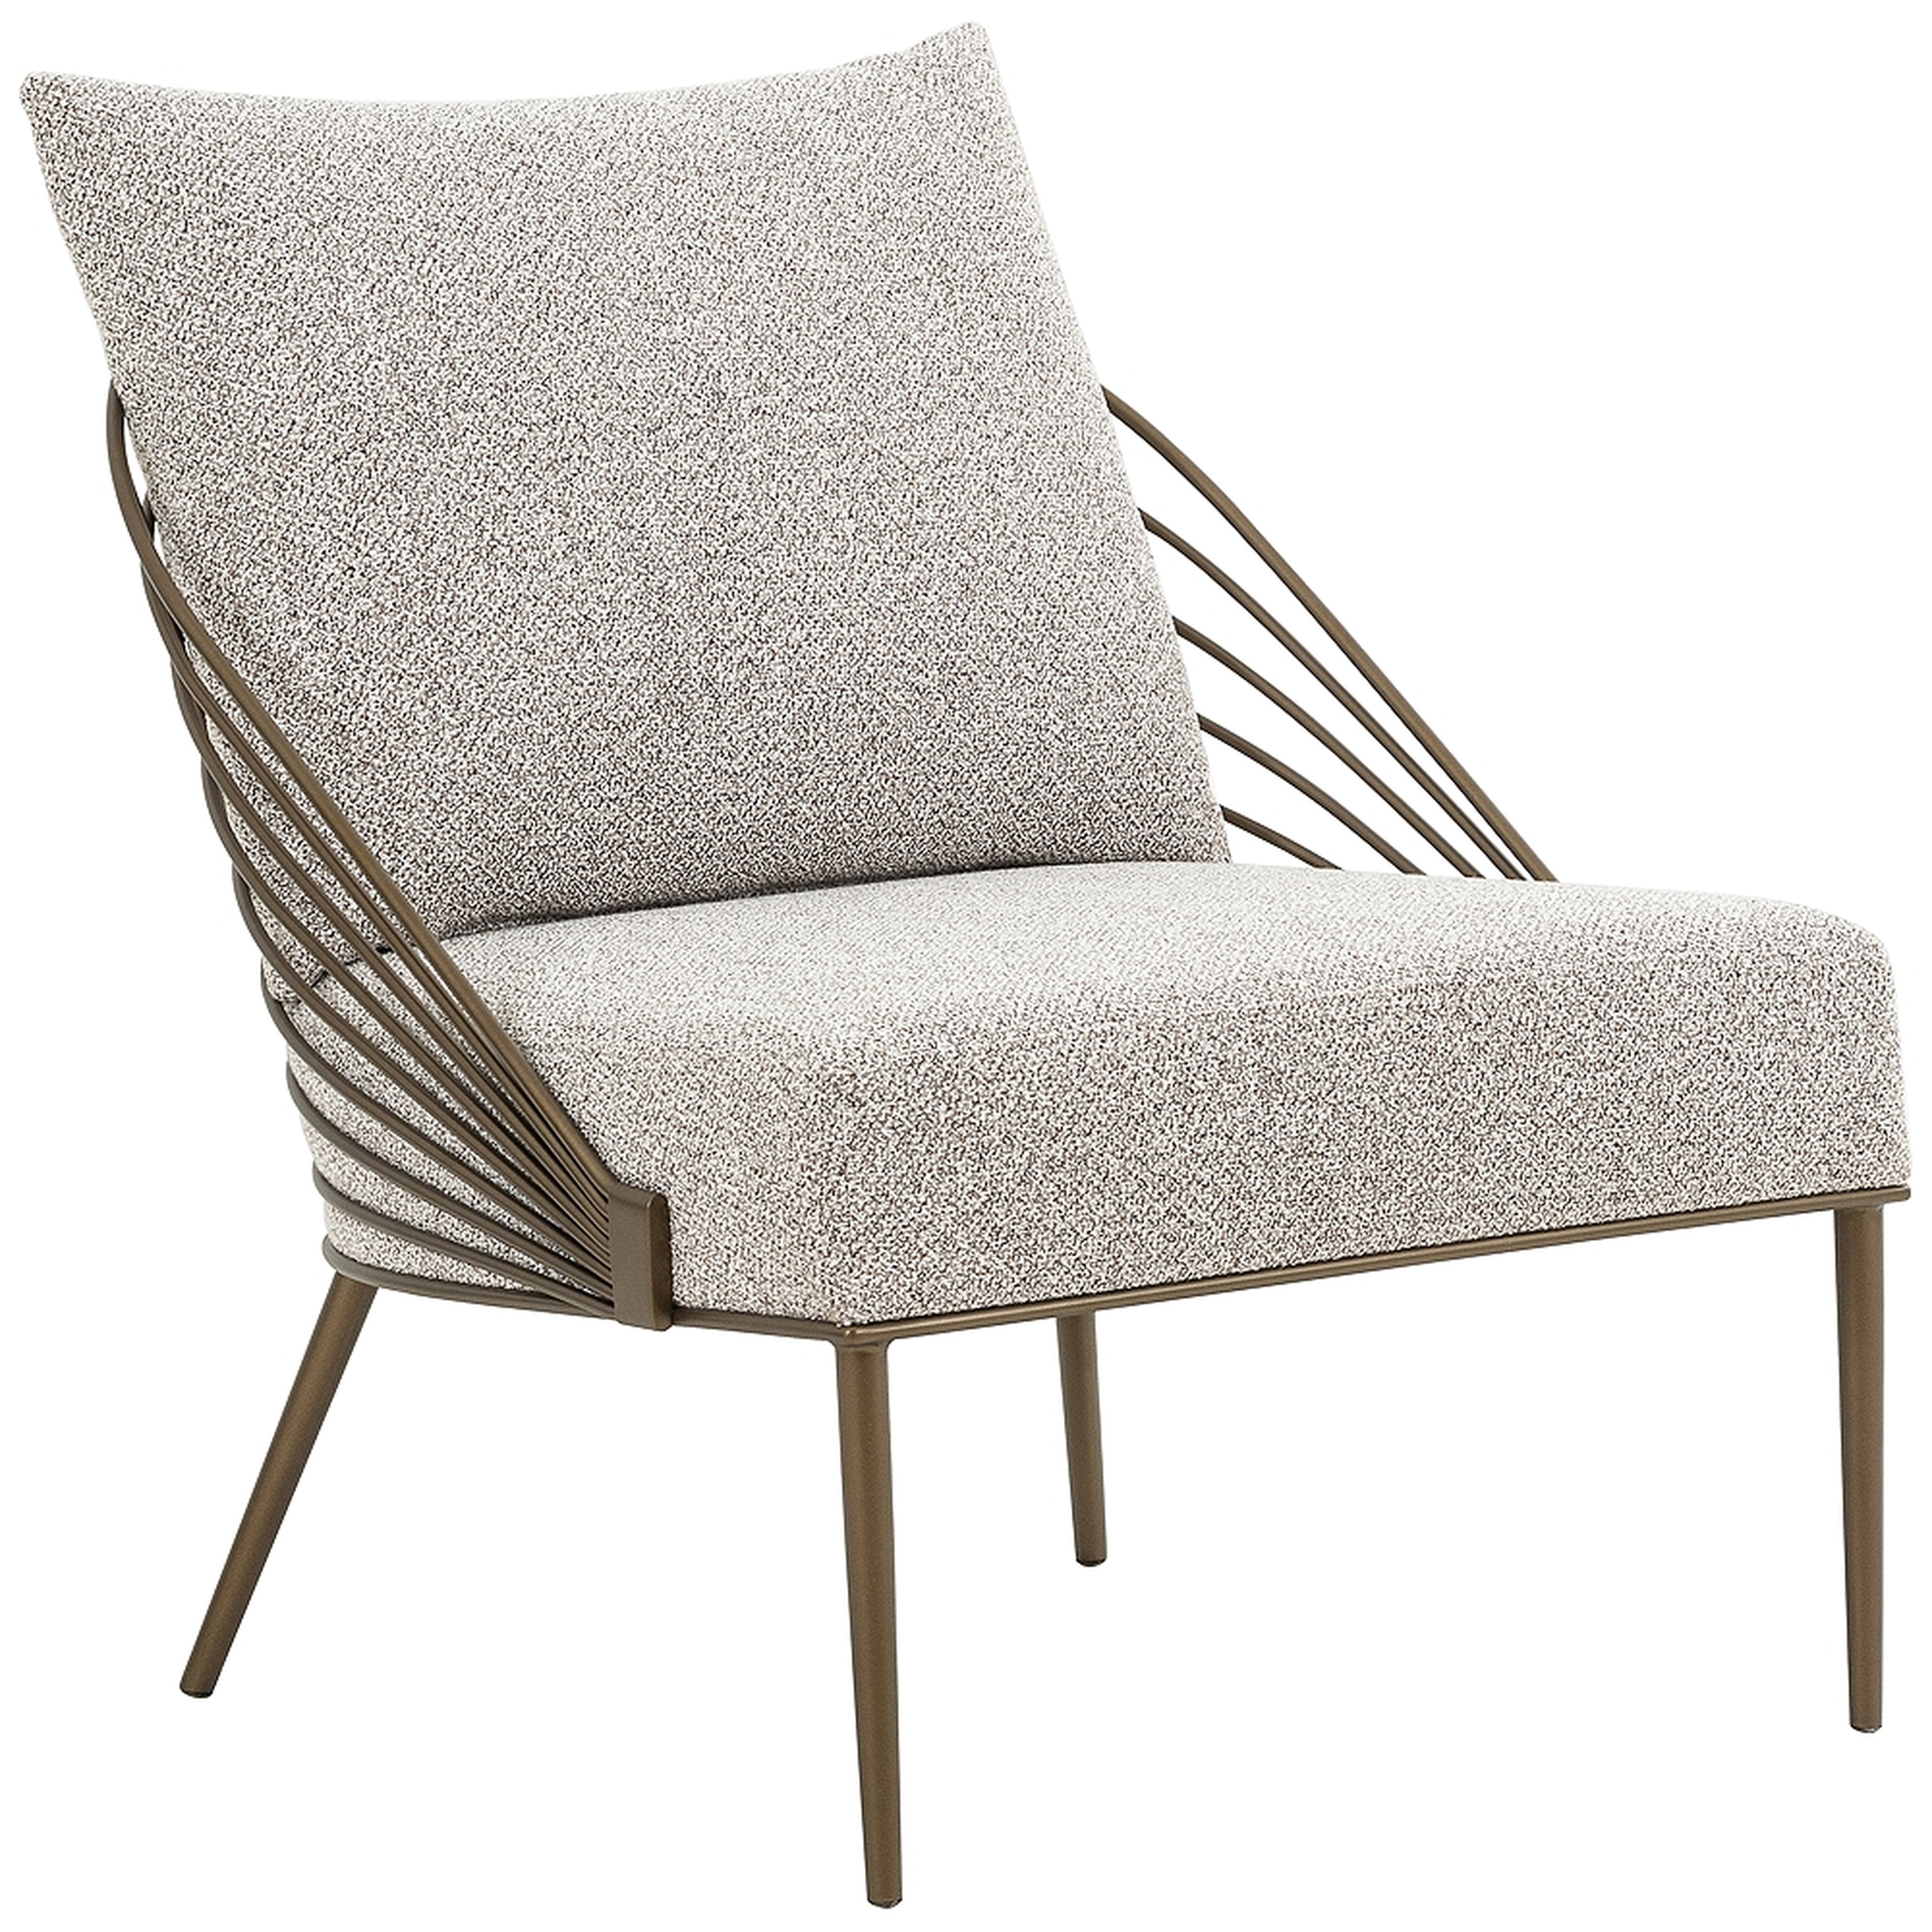 Zinnia Modern Astor Stone Gray Iron Chair - Style # 97M73 - Lamps Plus